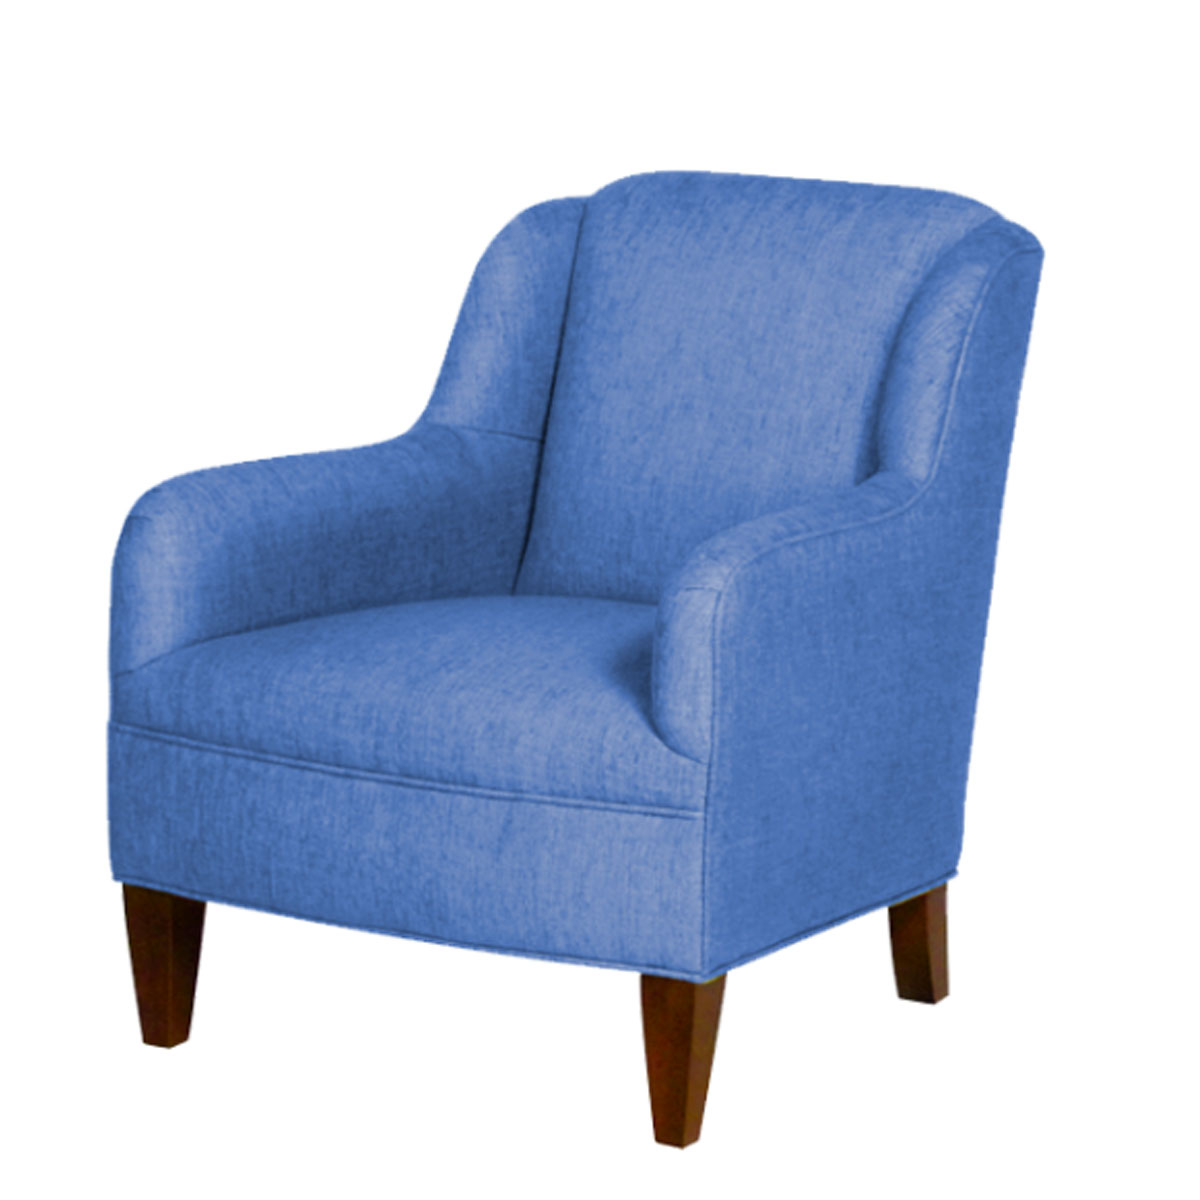 Hallagan Furniture 396 Lounge Chair